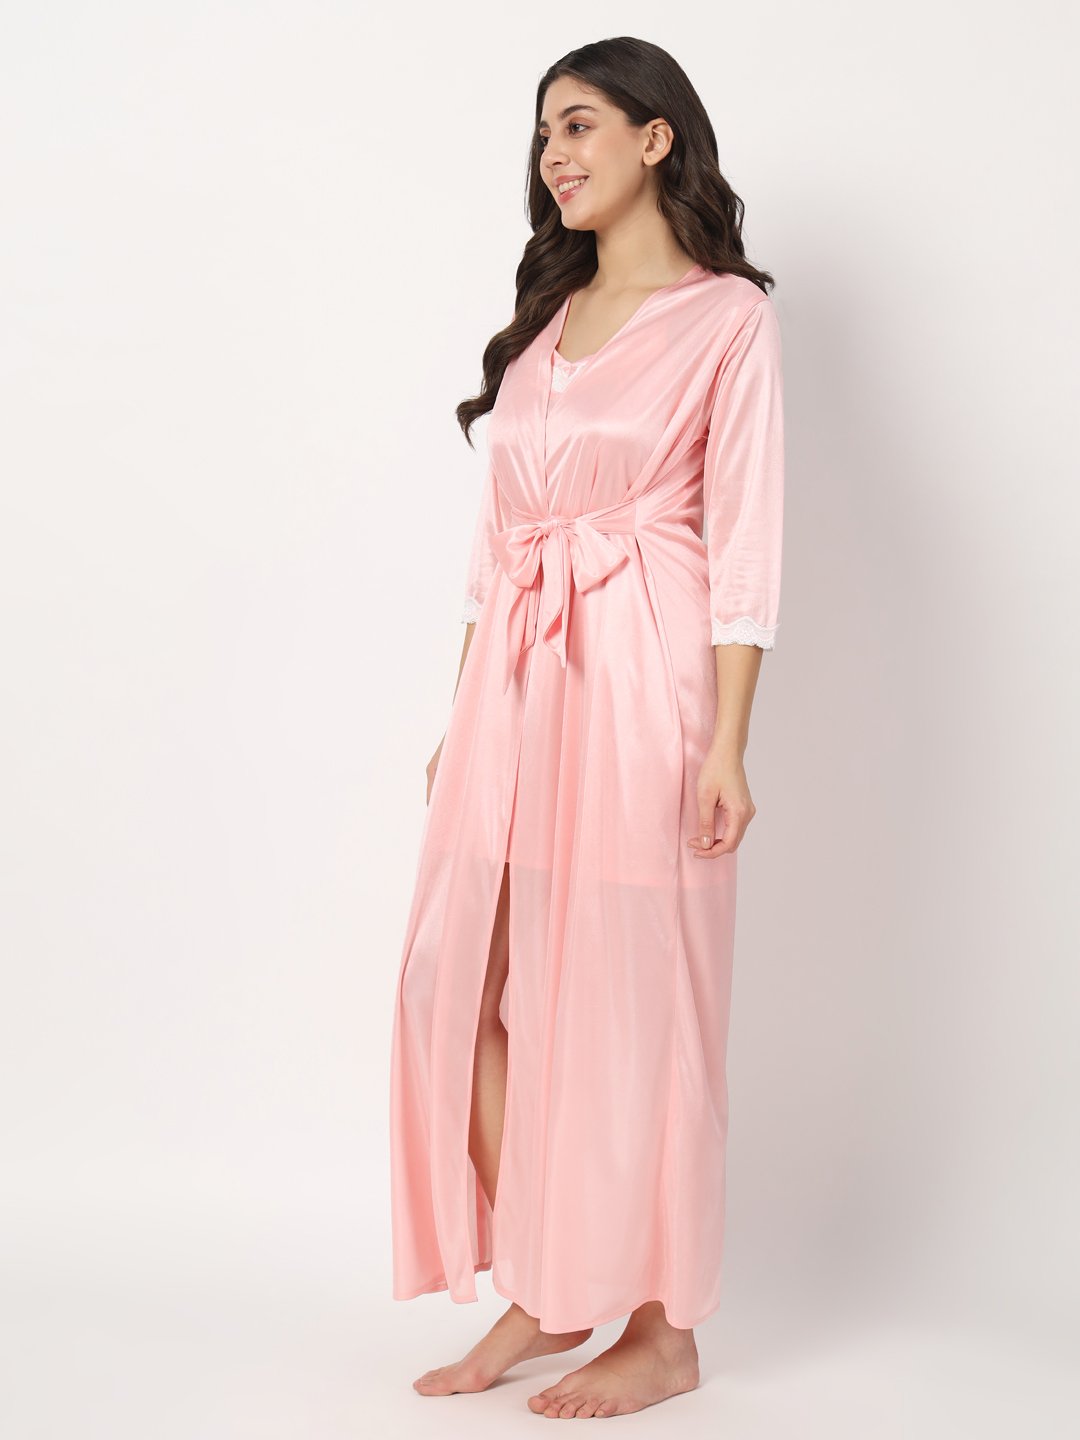 Hot Two Piece Satin Robe & Night Dress for Women X302Hl